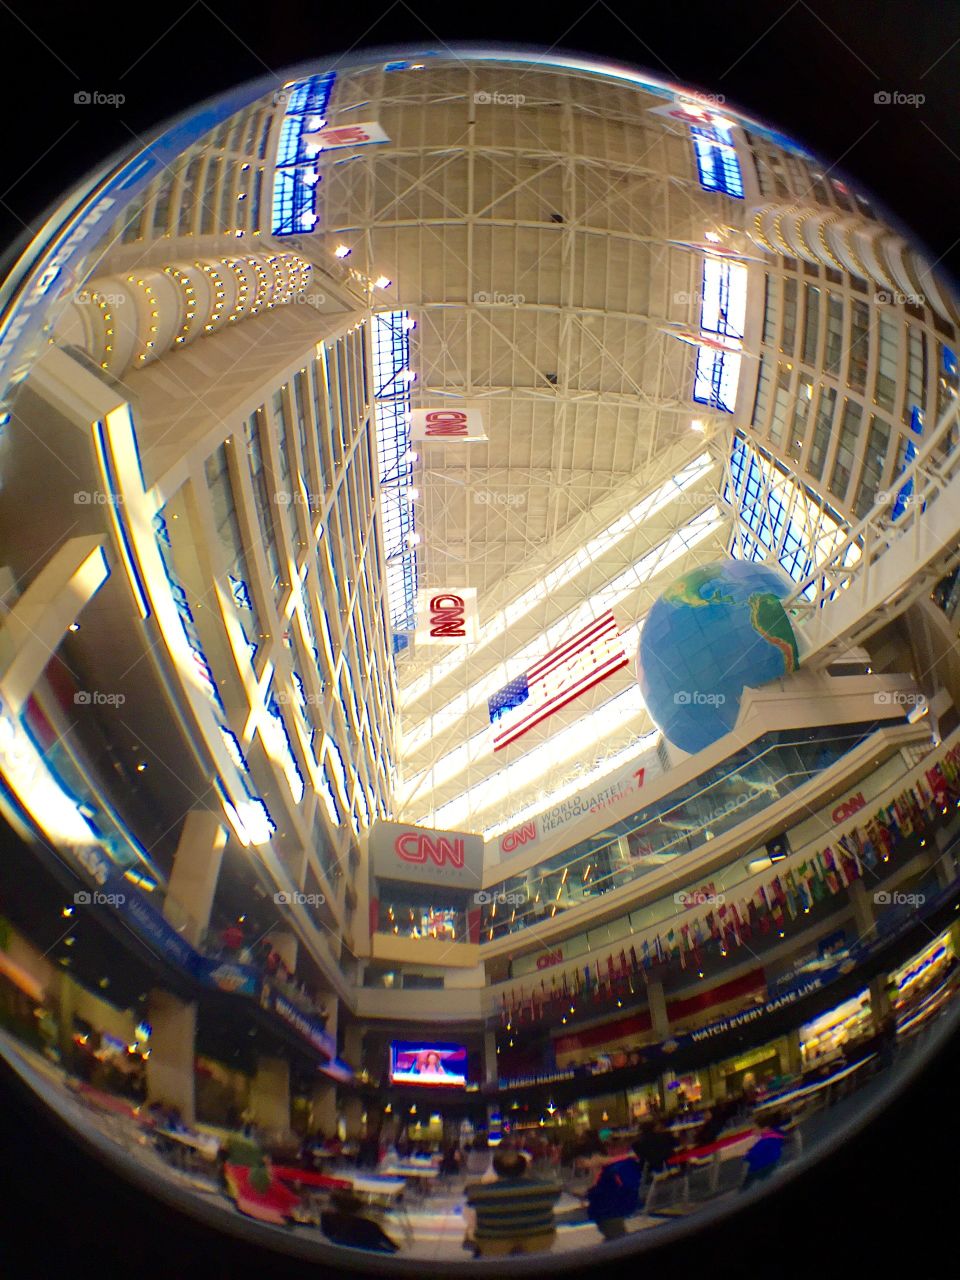 Fisheye lens view of CNN atrium Headquarters in Atlanta, Georgia. 